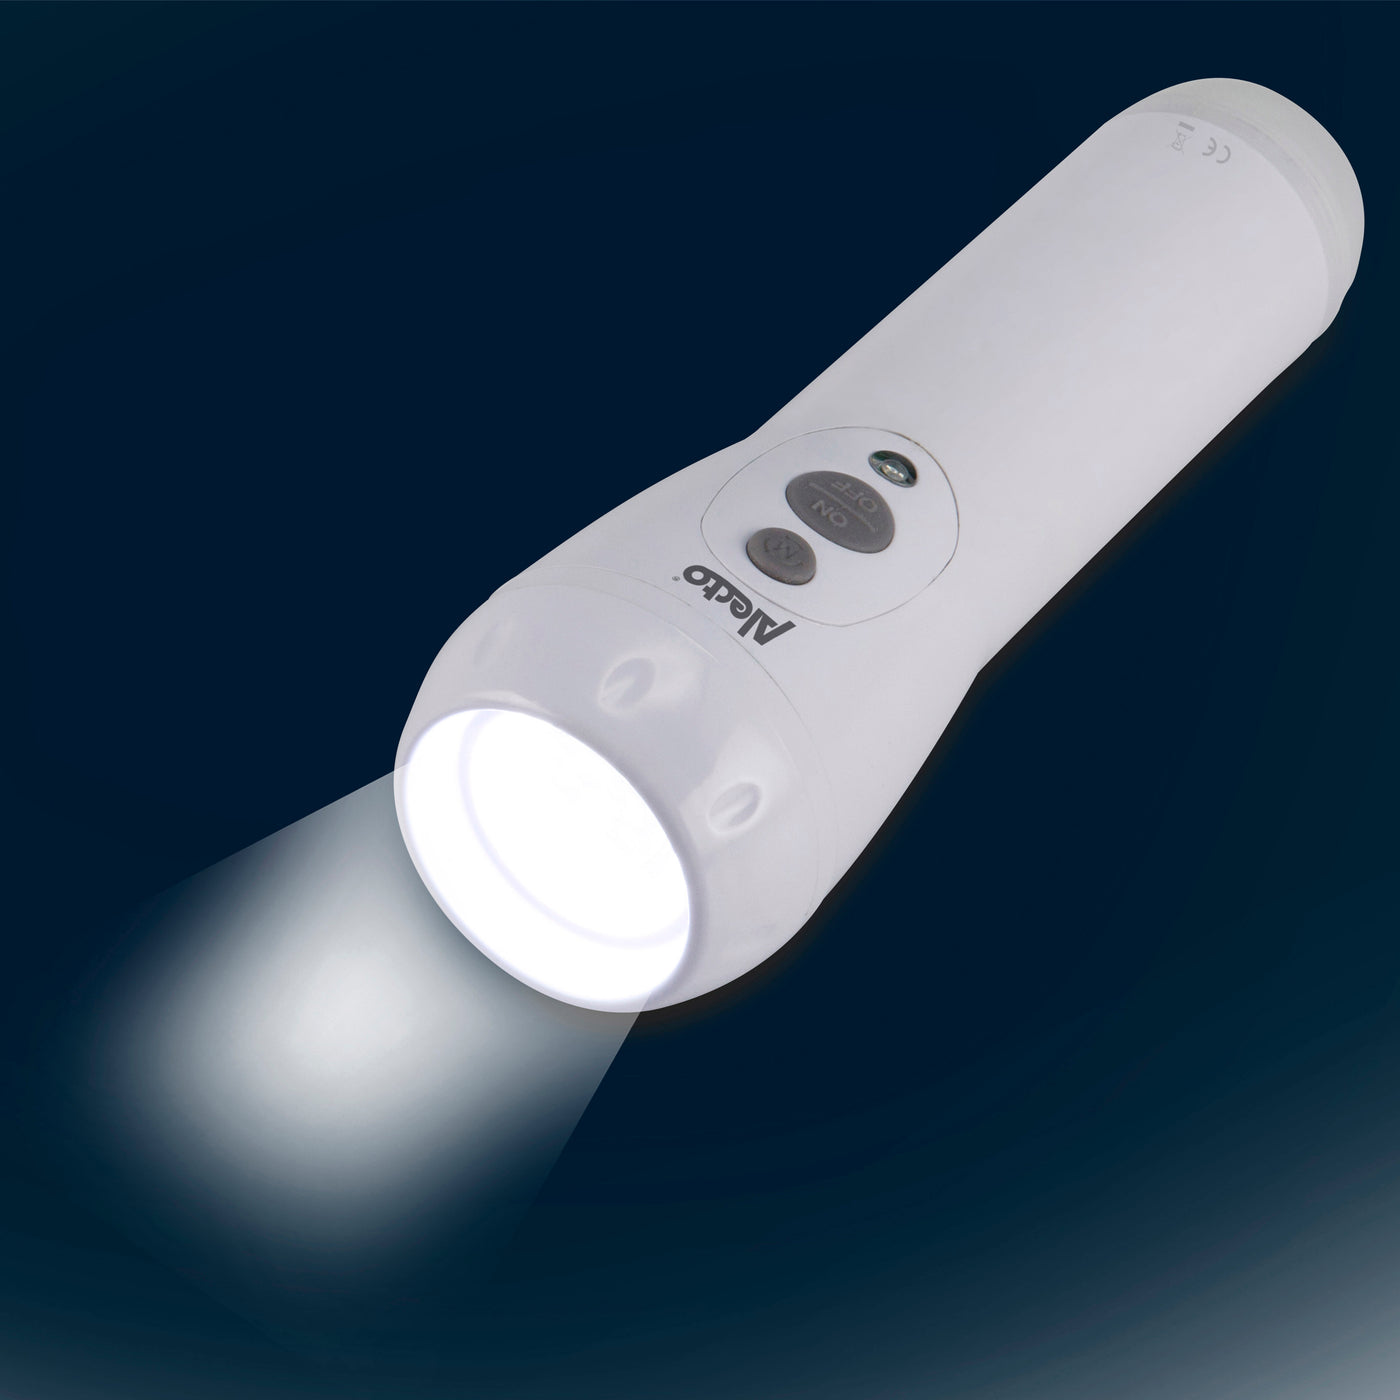 Alecto ATL-110 - Rechargeable LED flashlight / automatic LED night light, white